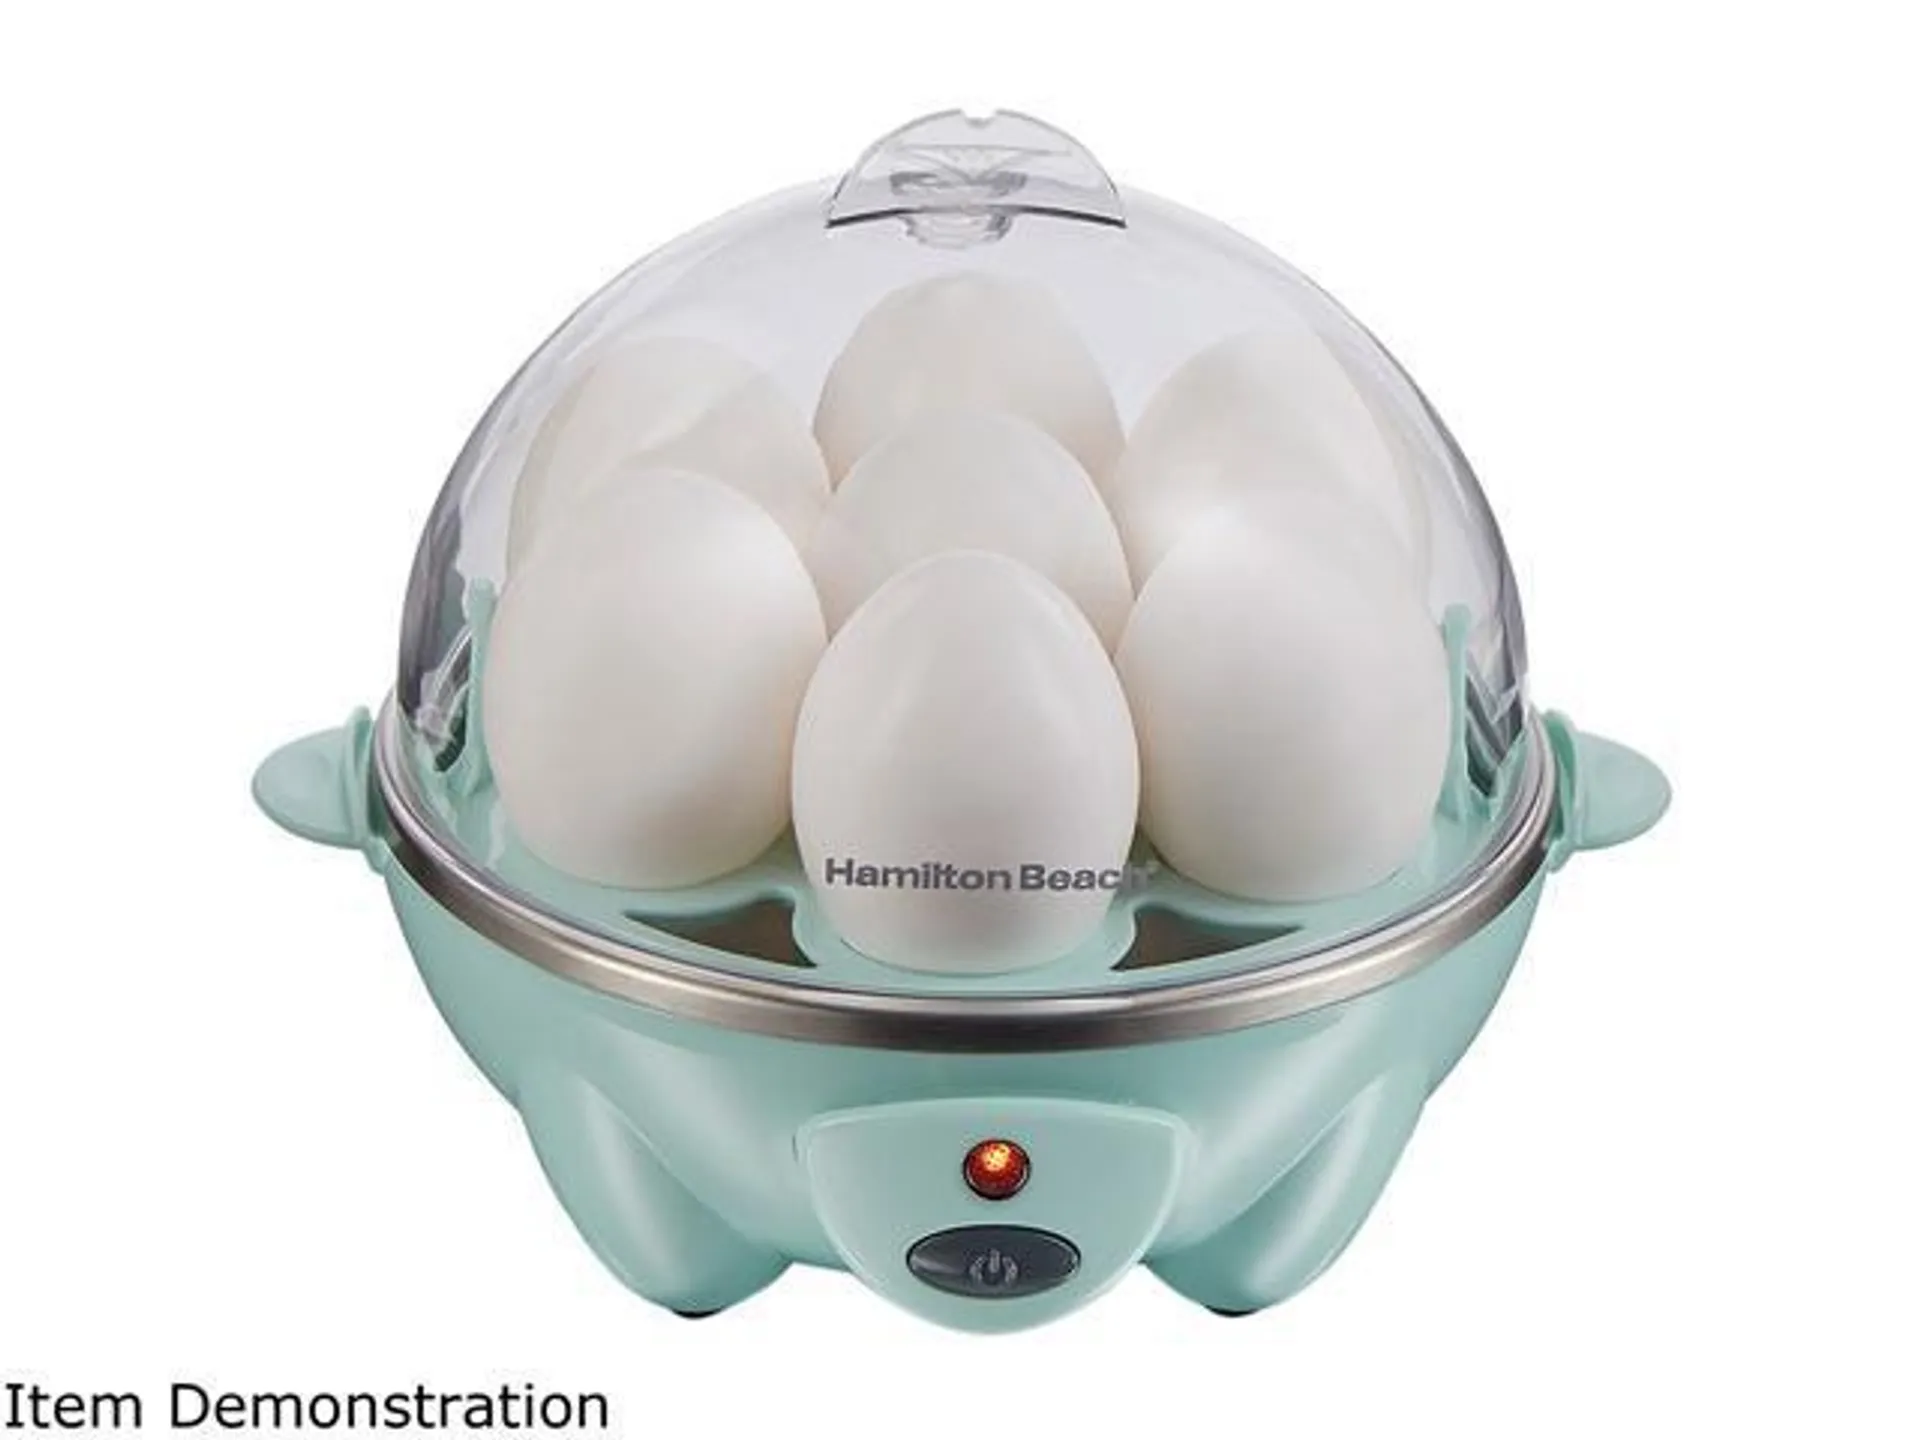 Hamilton Beach 25504 Teal 3-in-1 Egg Cooker with 7 Egg Capacity